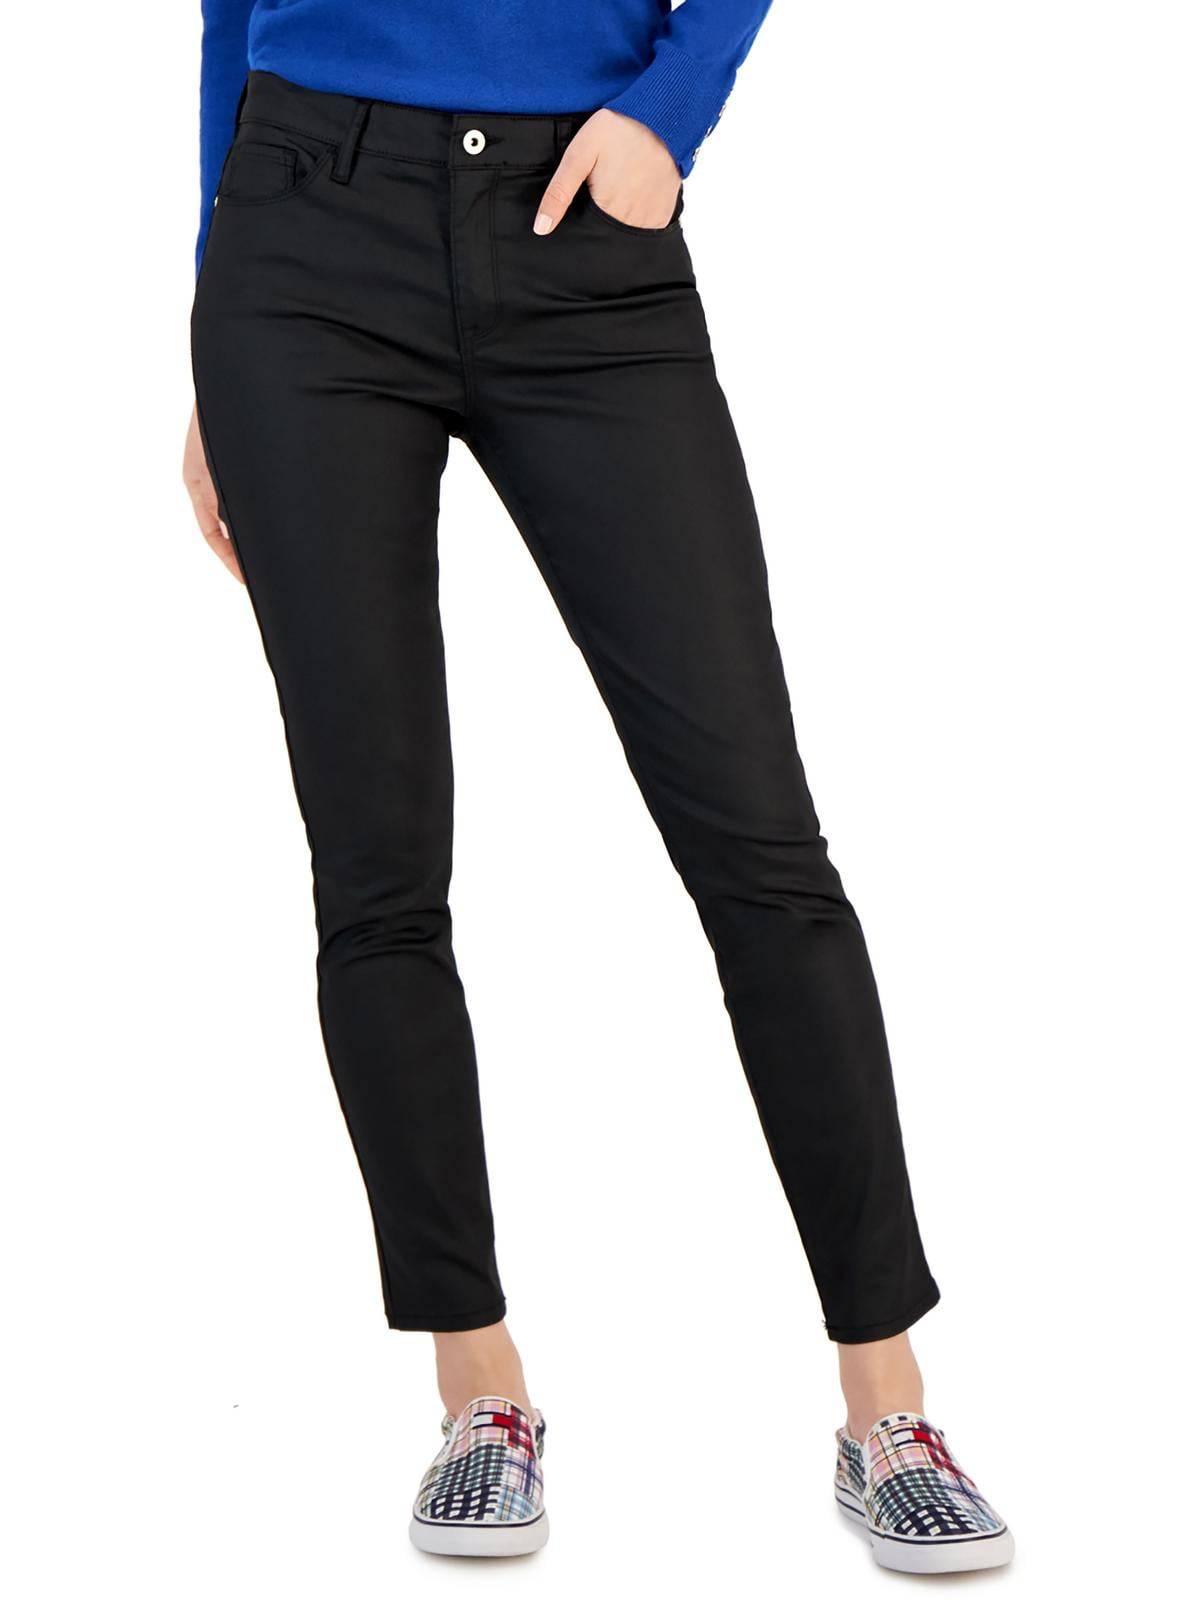 Tommy Hilfiger Women's Coated Skinny Ankle Jeans Black Size 14